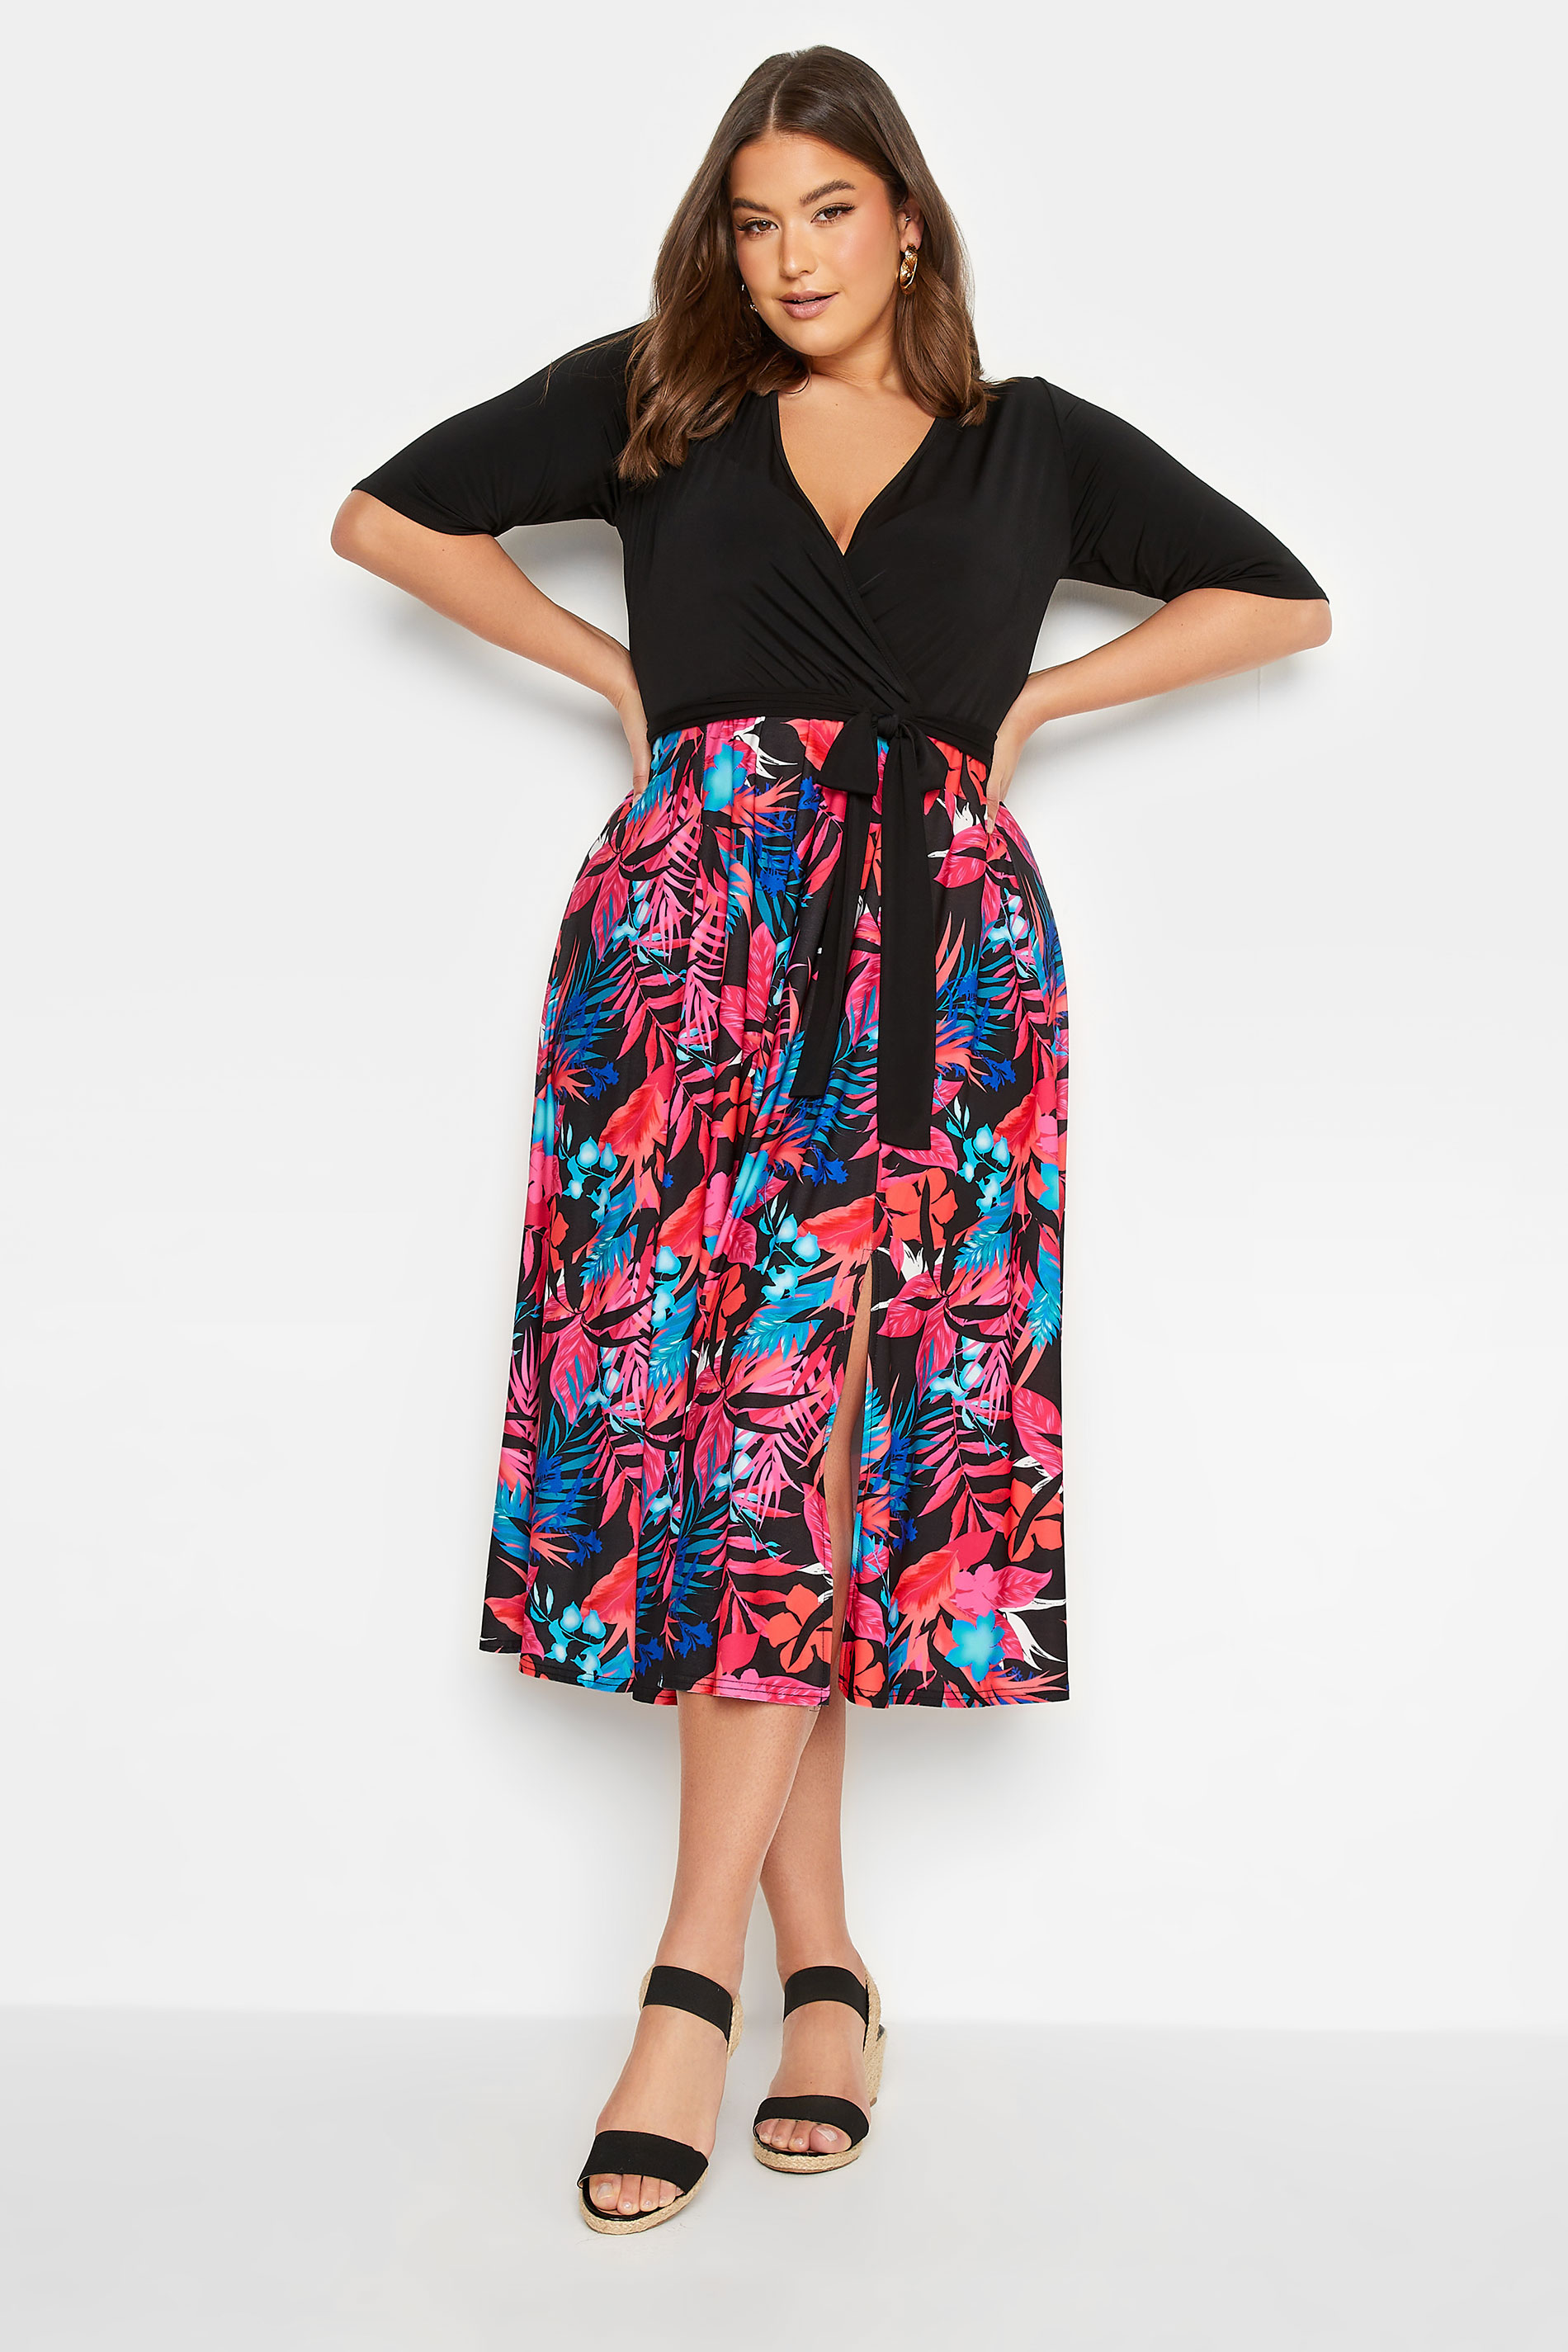 YOURS LONDON Plus Size Black Tropical Print Wrap Dress | Yours Clothing 1